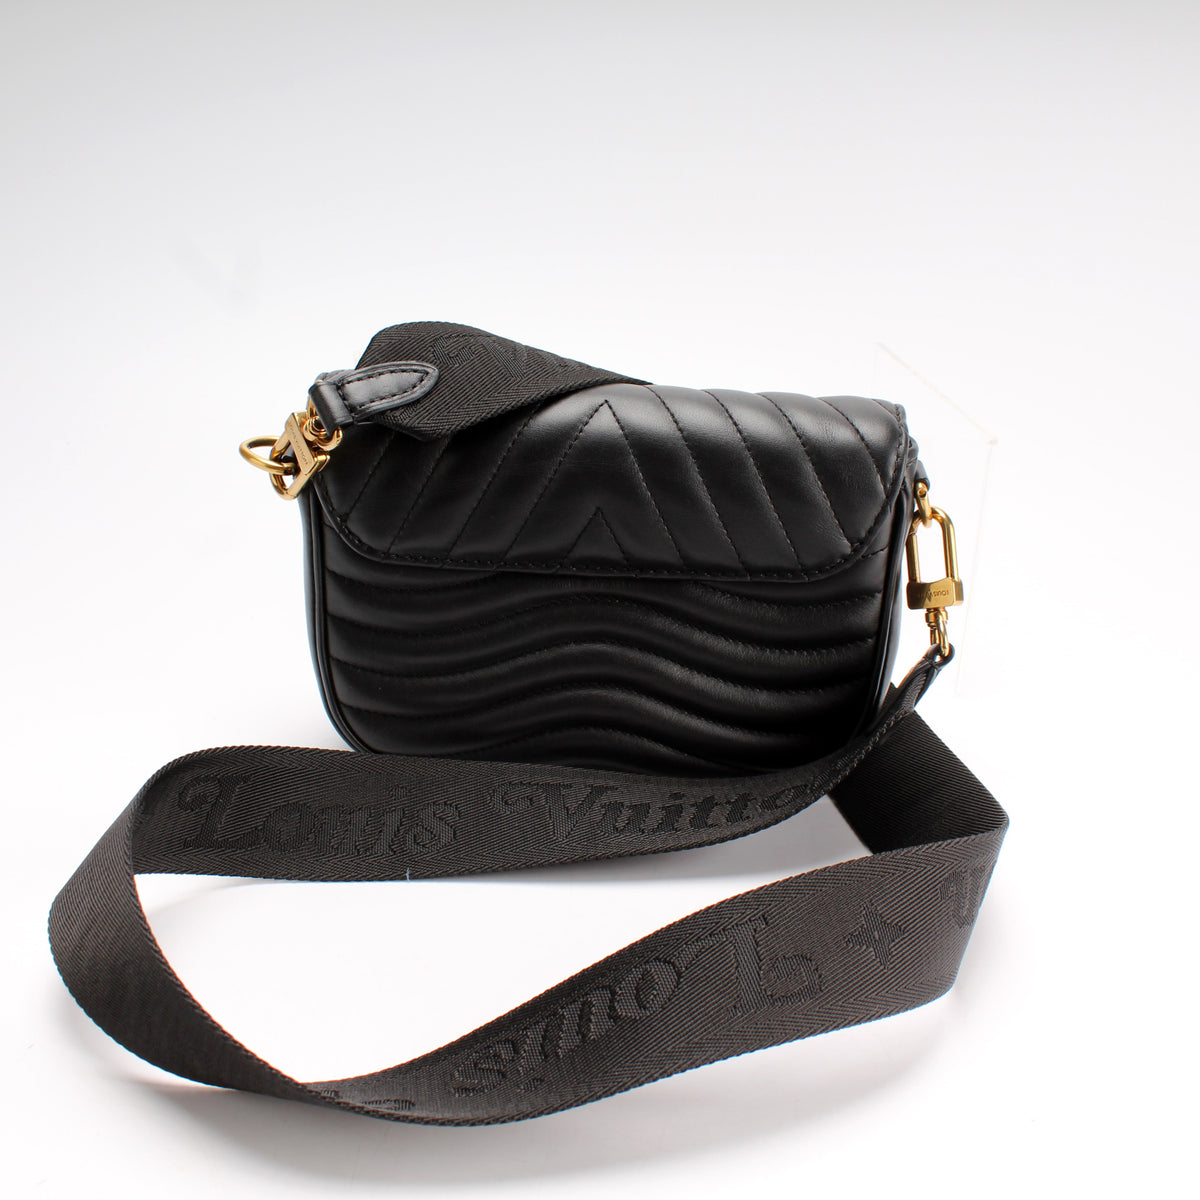 New Wave Multi- Pochette Bag Designer Handbags Famous Brands with